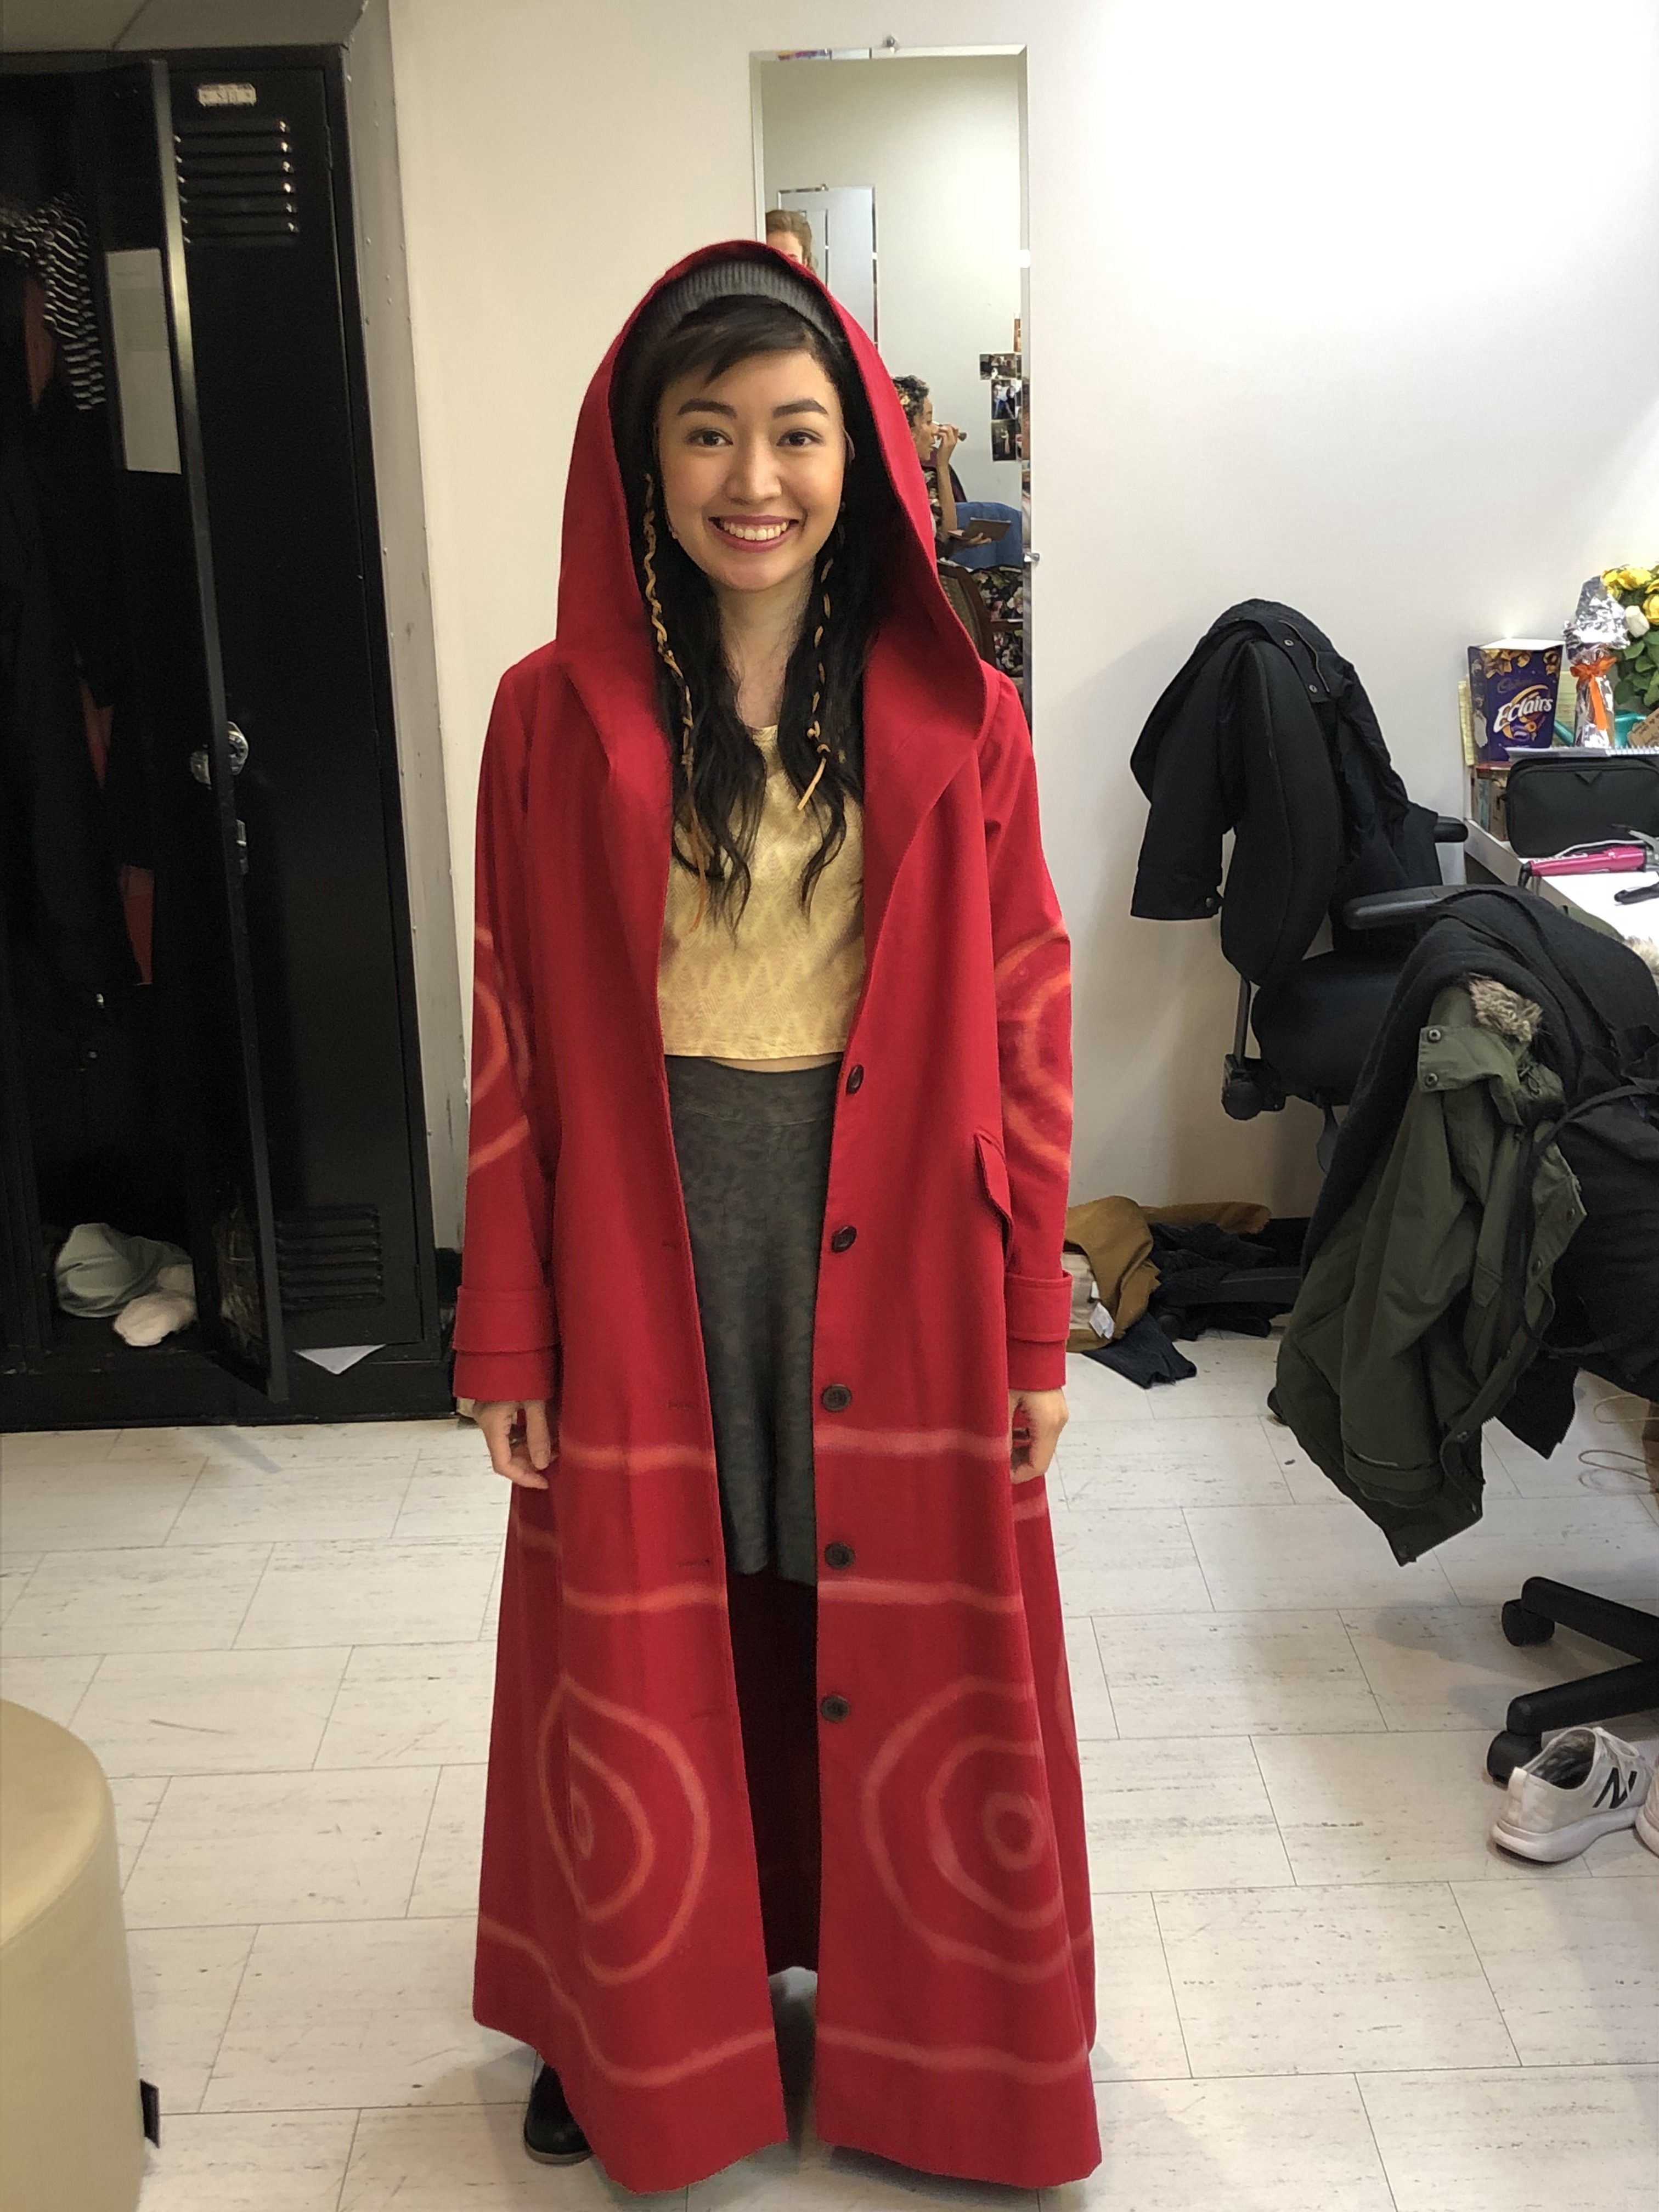 Regina in her Little Red Riding Hood costume. Design by Valérie Thérèse Bart